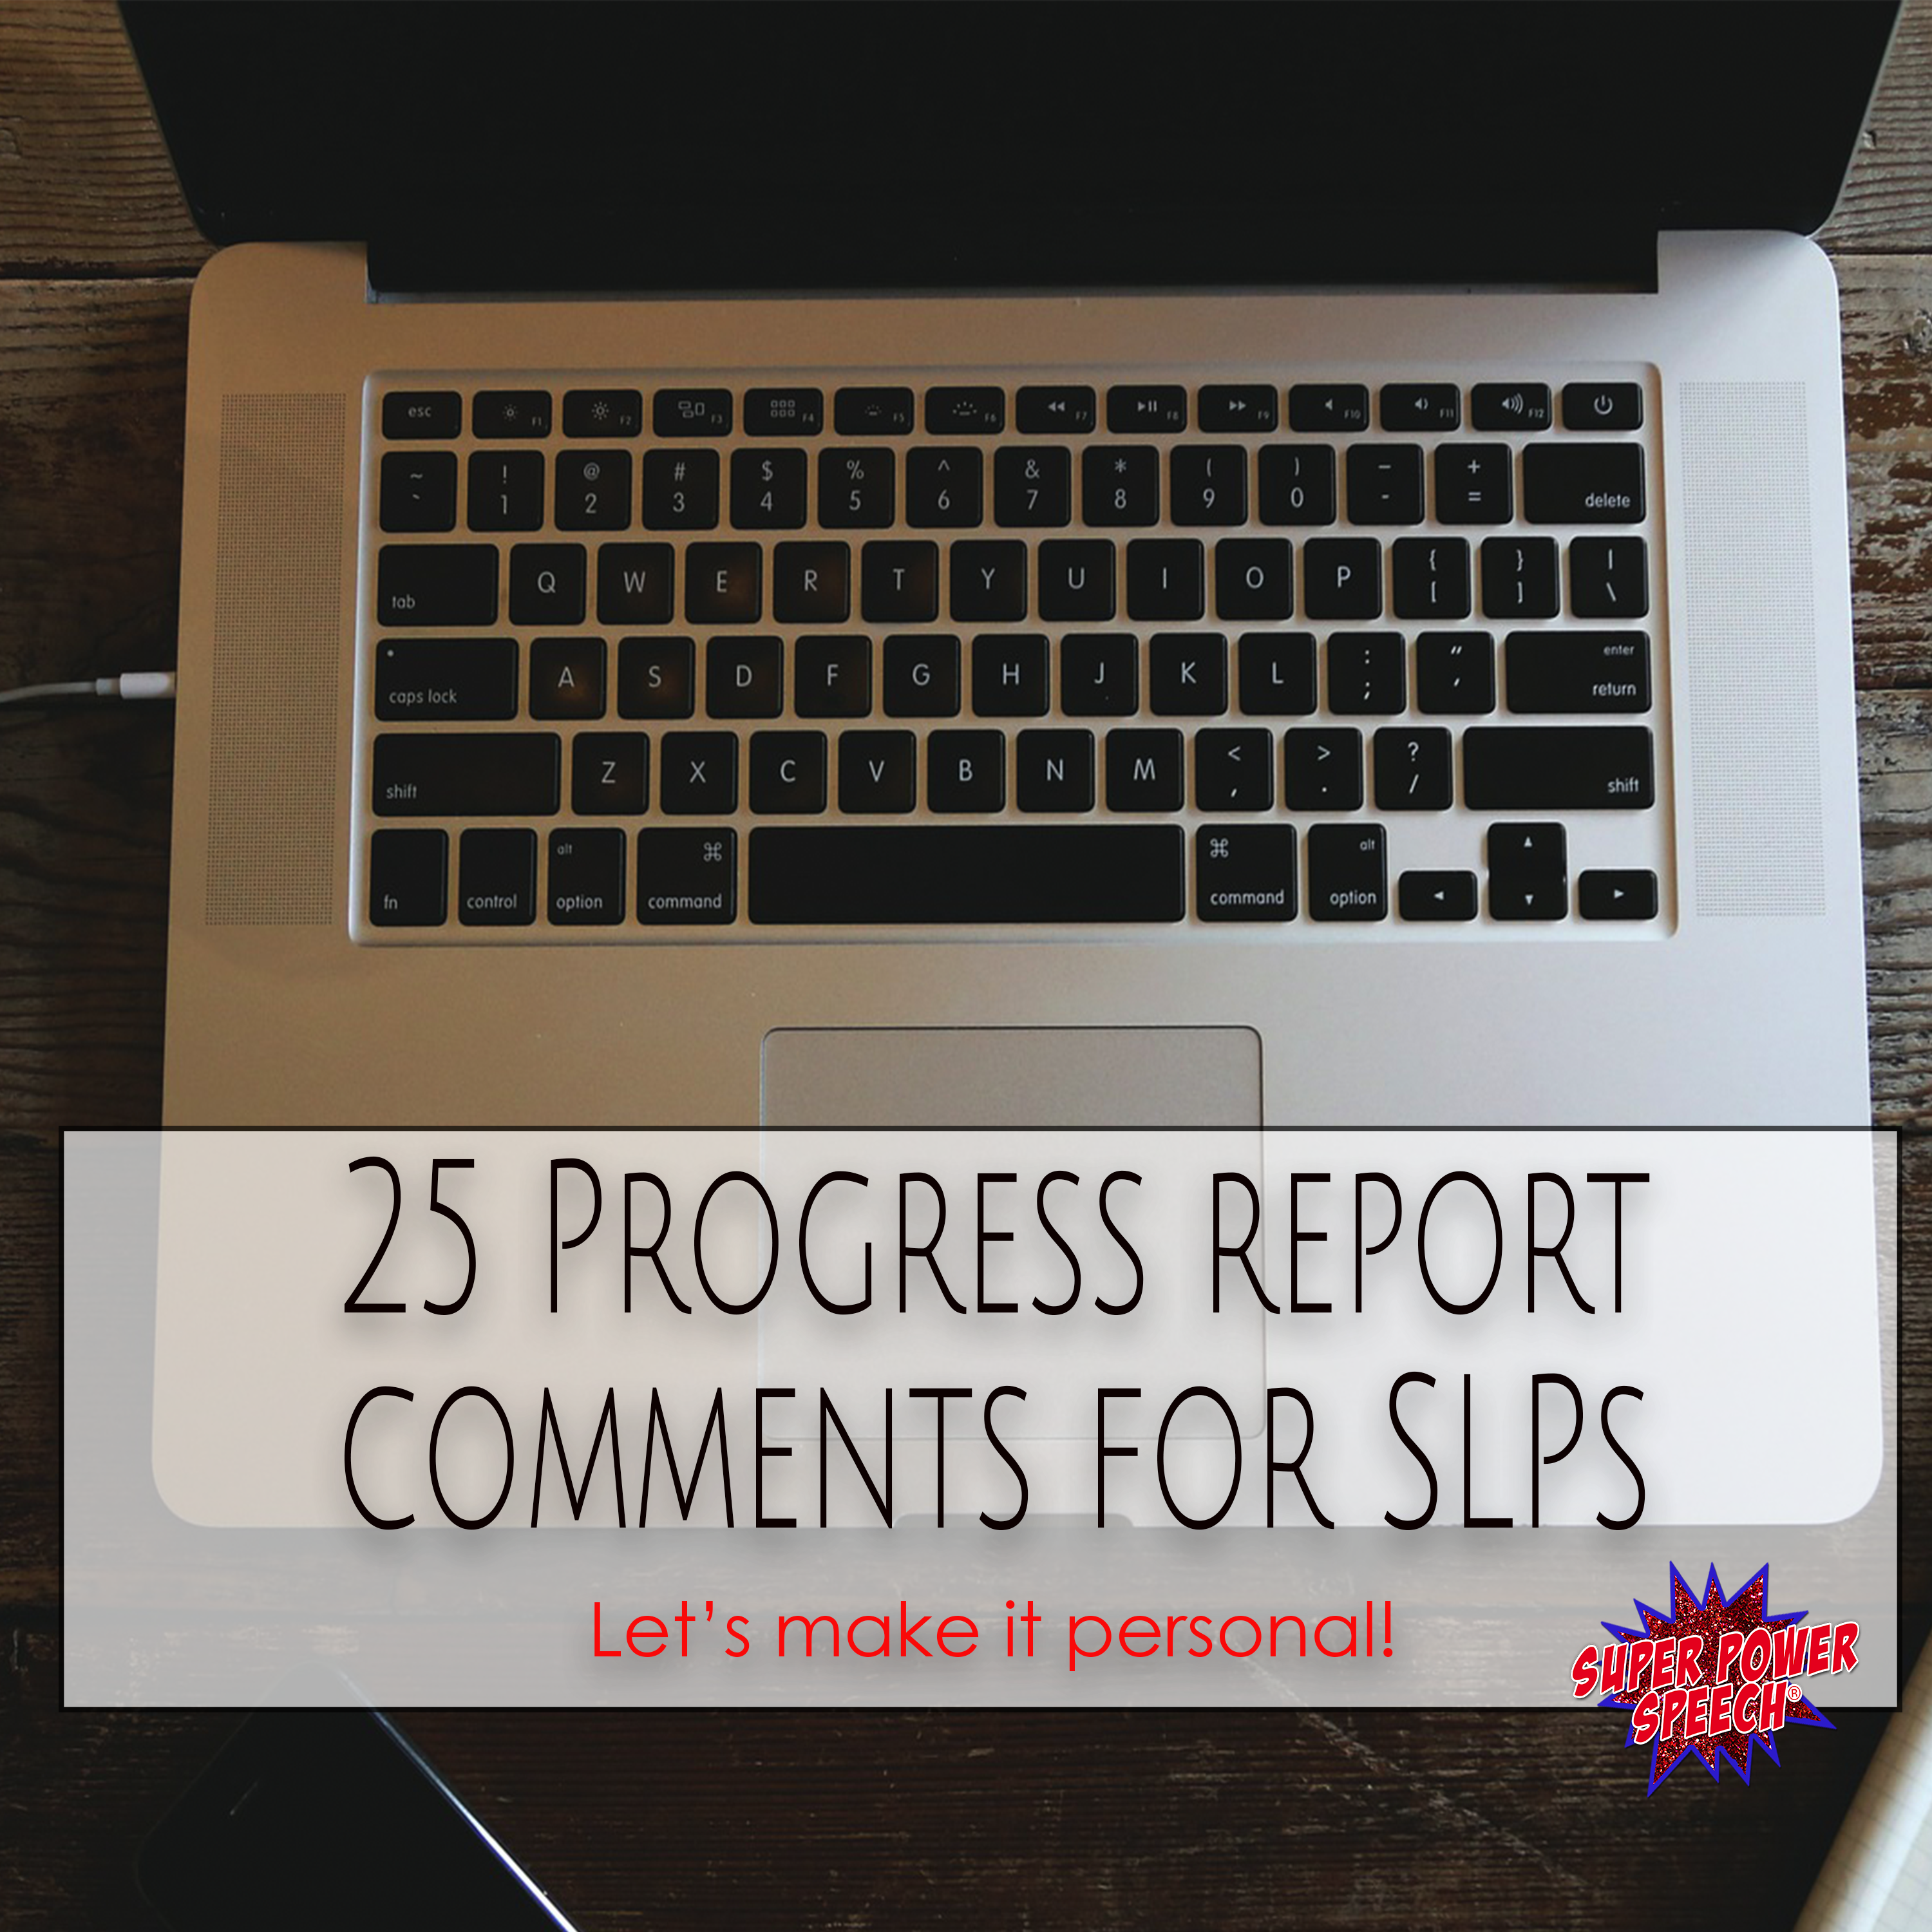 25+ Progress Report Comments for SLPs